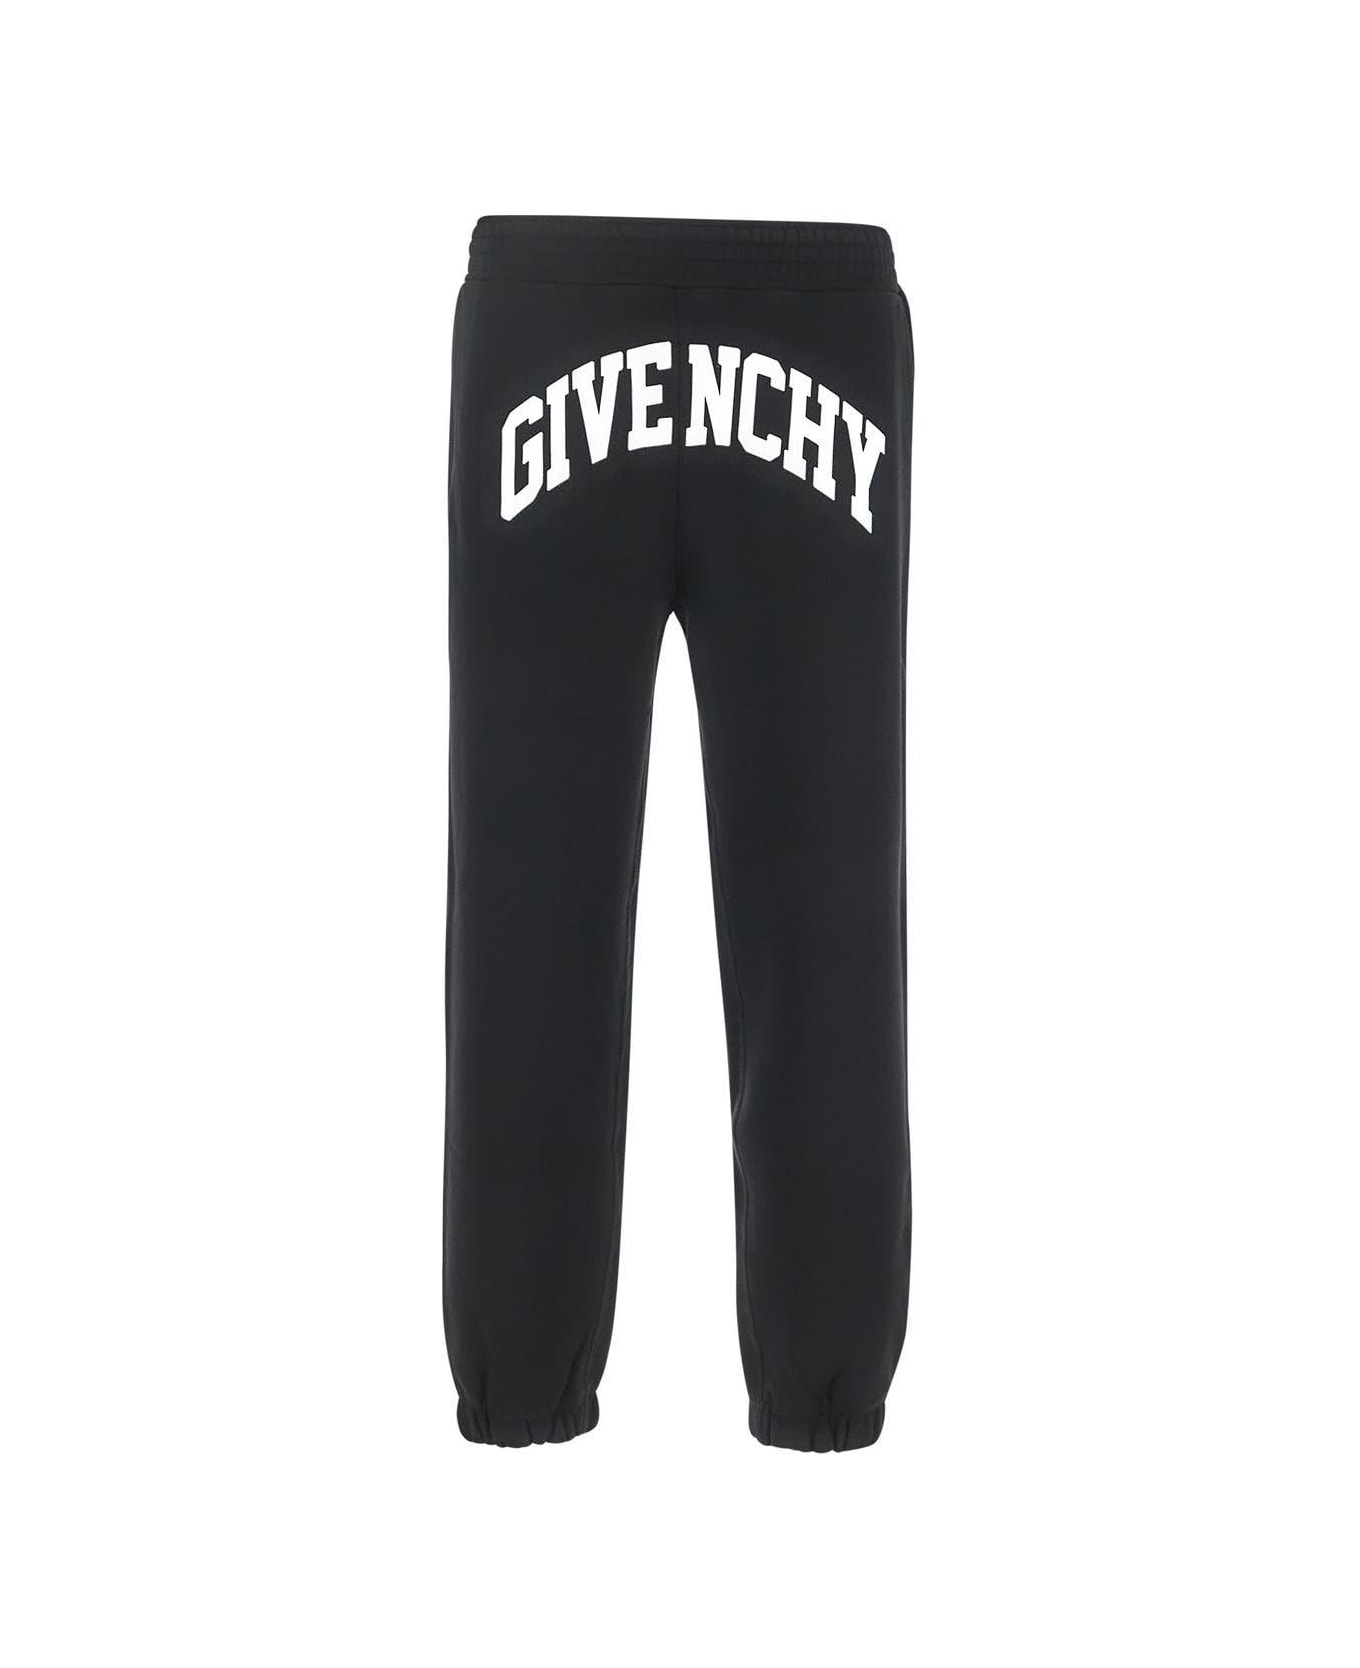 Givenchy Black Sweatpants - Black